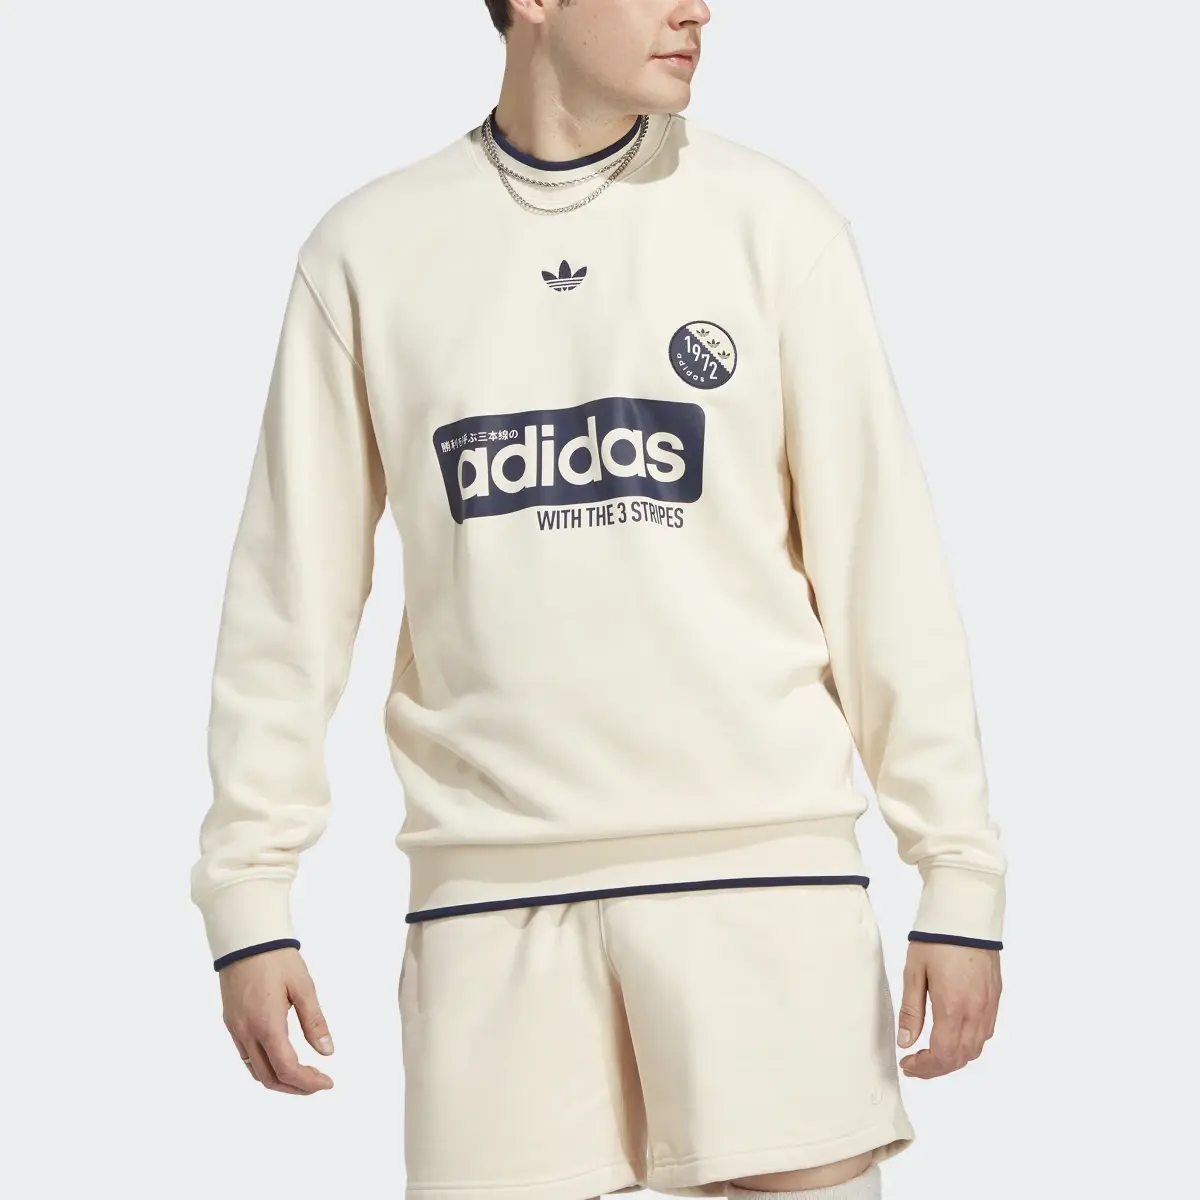 Adidas Sweatshirt Blokepop. 1